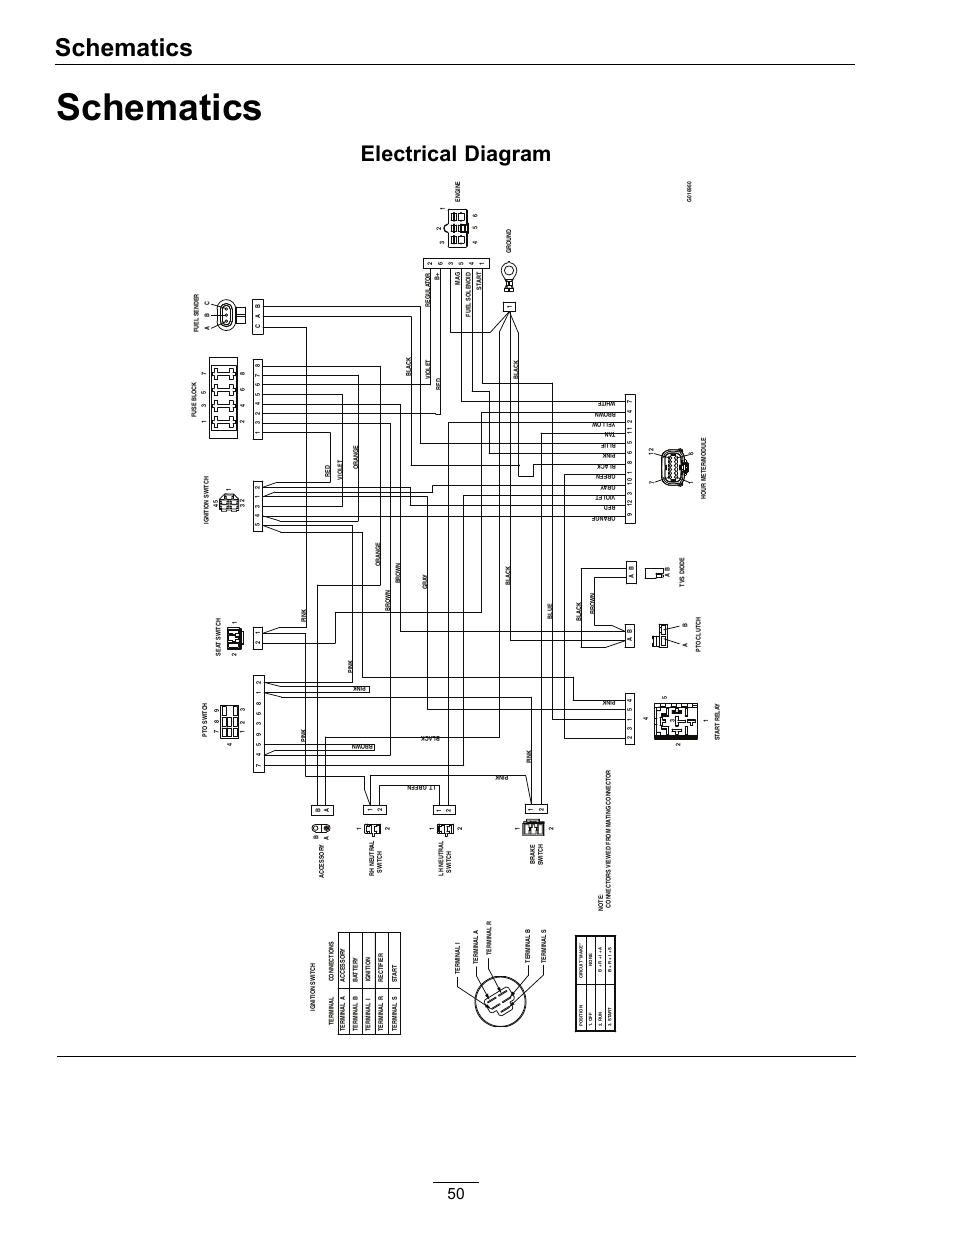 110cc go kart wiring diagram